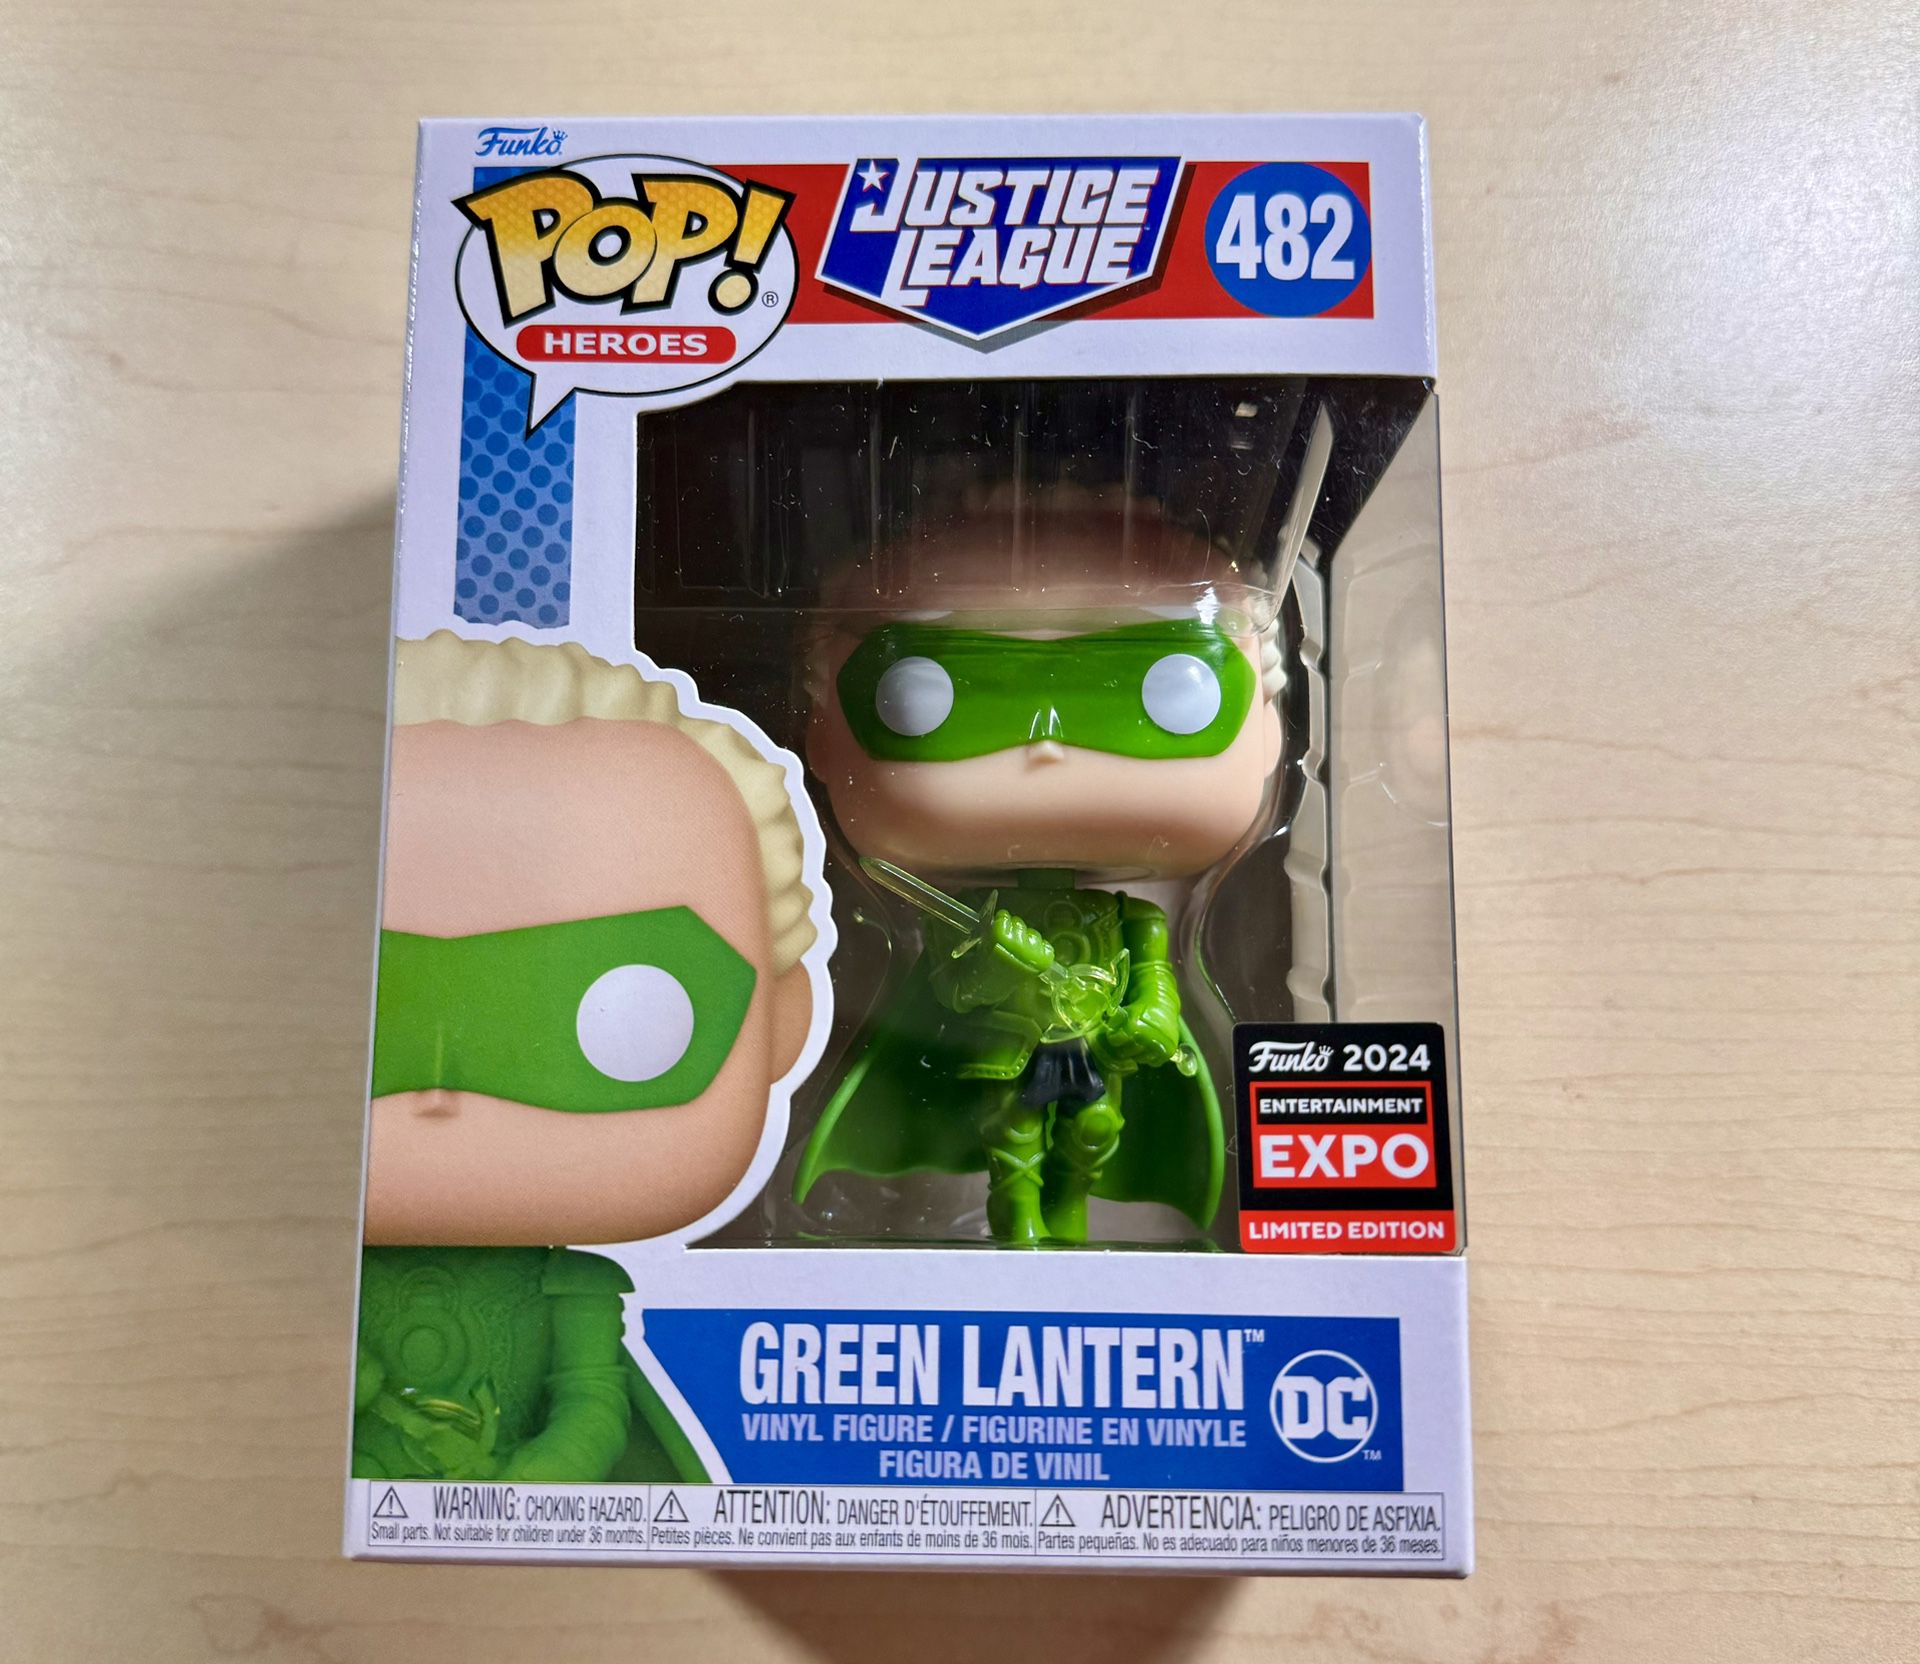 Funko POP! Heroes Justice League #482 Green Lantern - 2024 C2E2 Exclusive